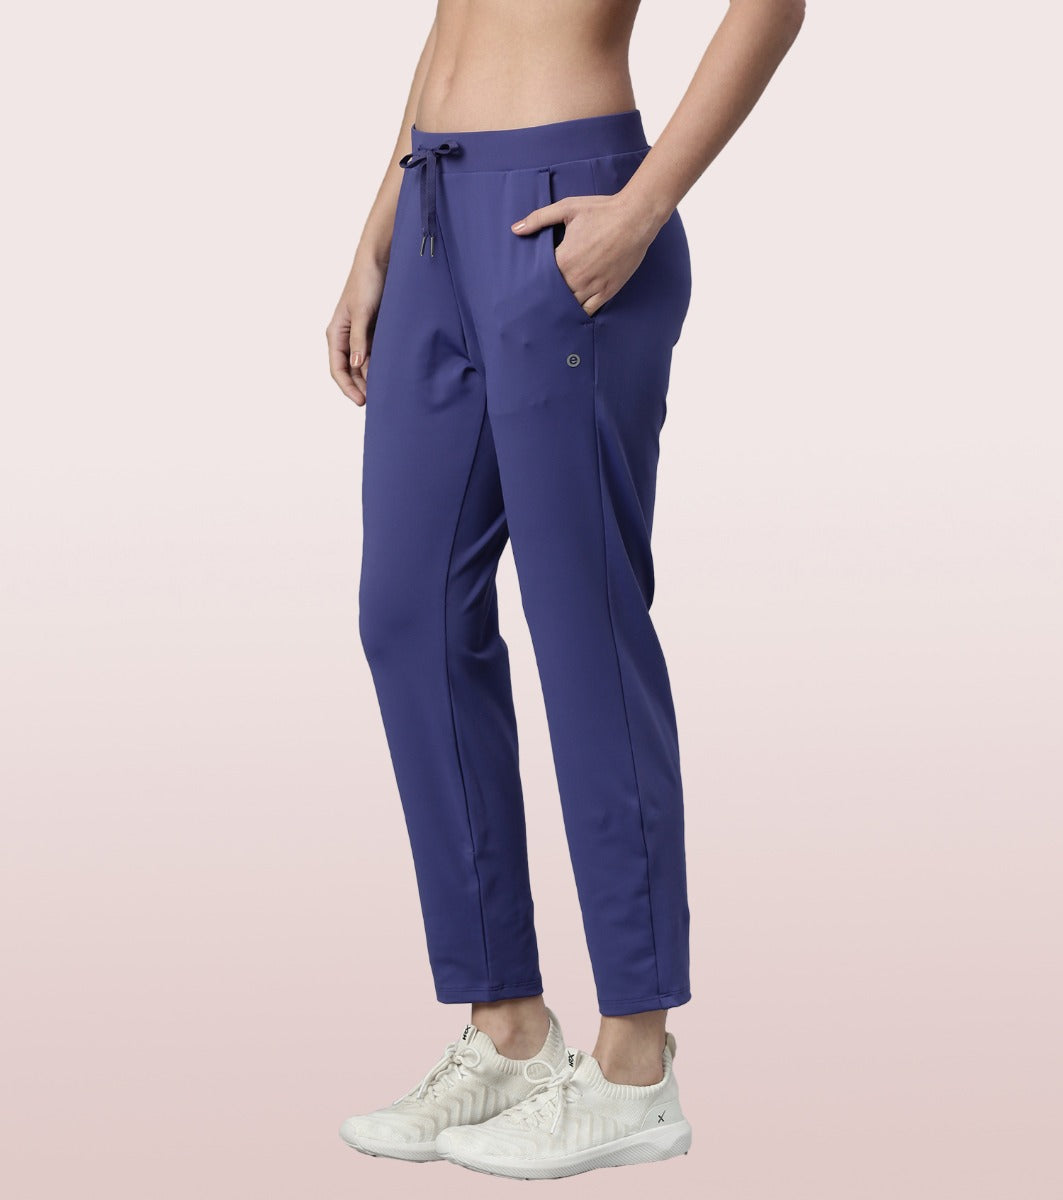 Buy ENAMOR Cotton Activewear Women's Track Pants | Shoppers Stop